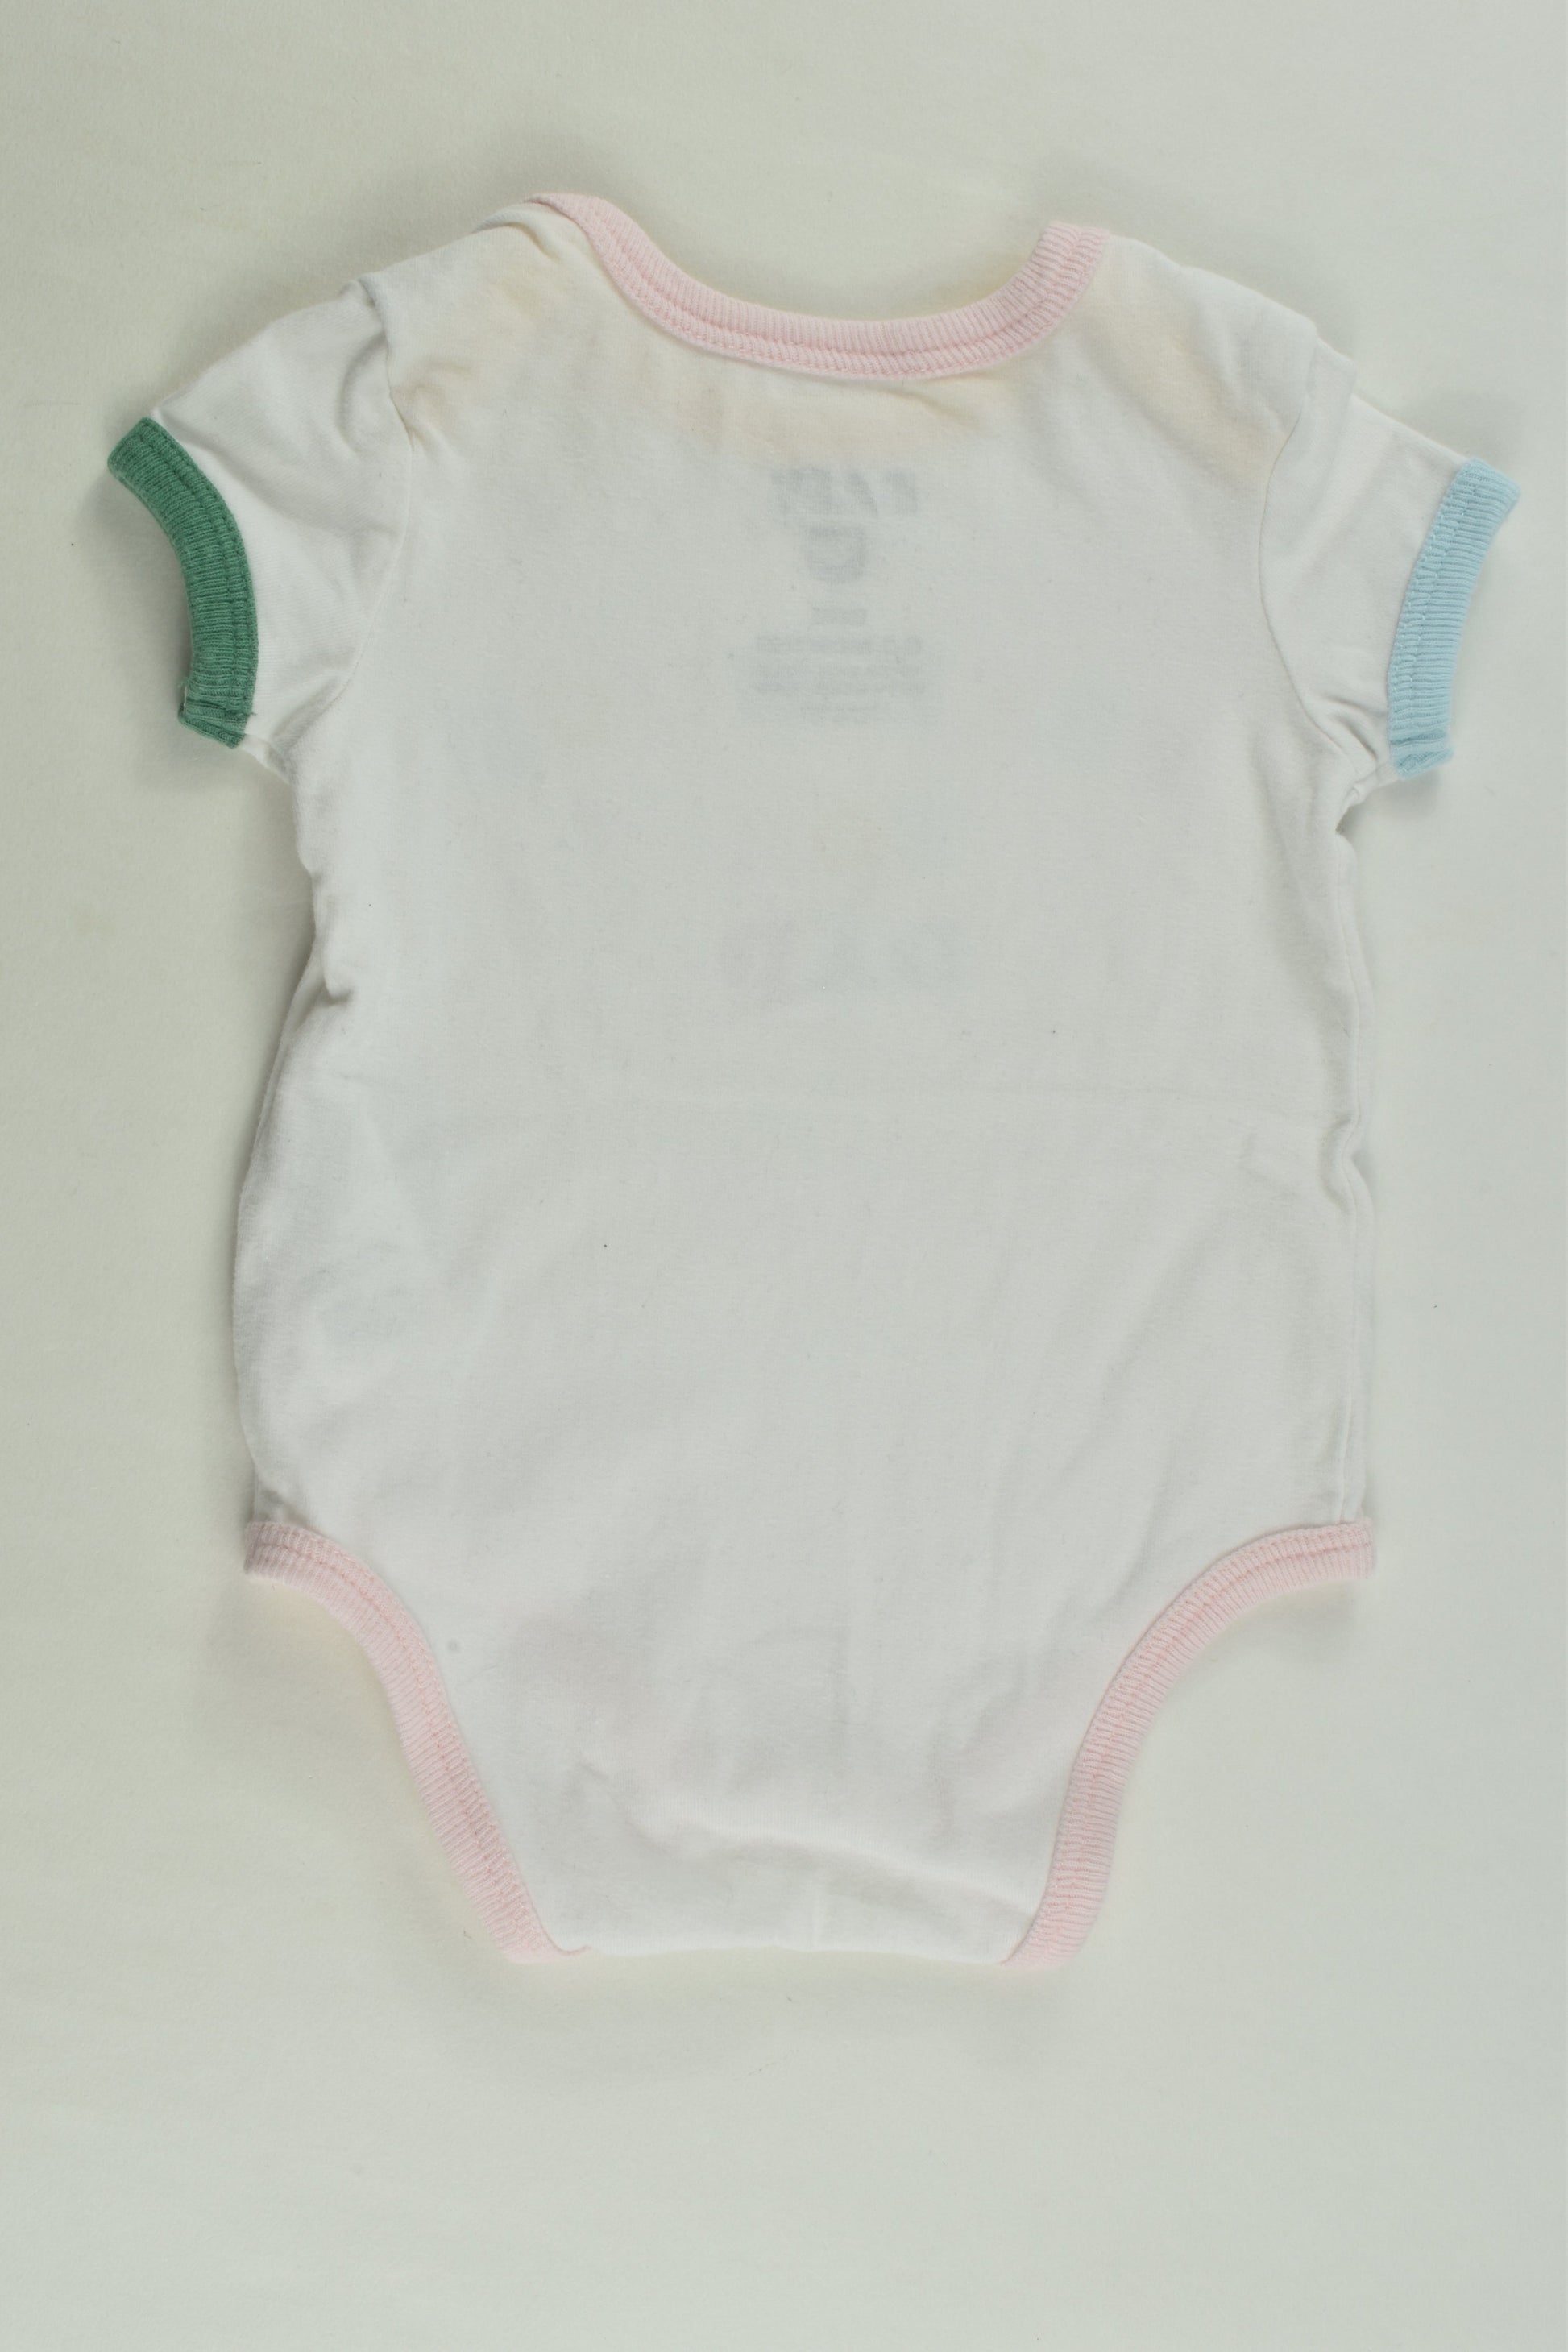 Cotton On Baby Size 000 Bodysuit